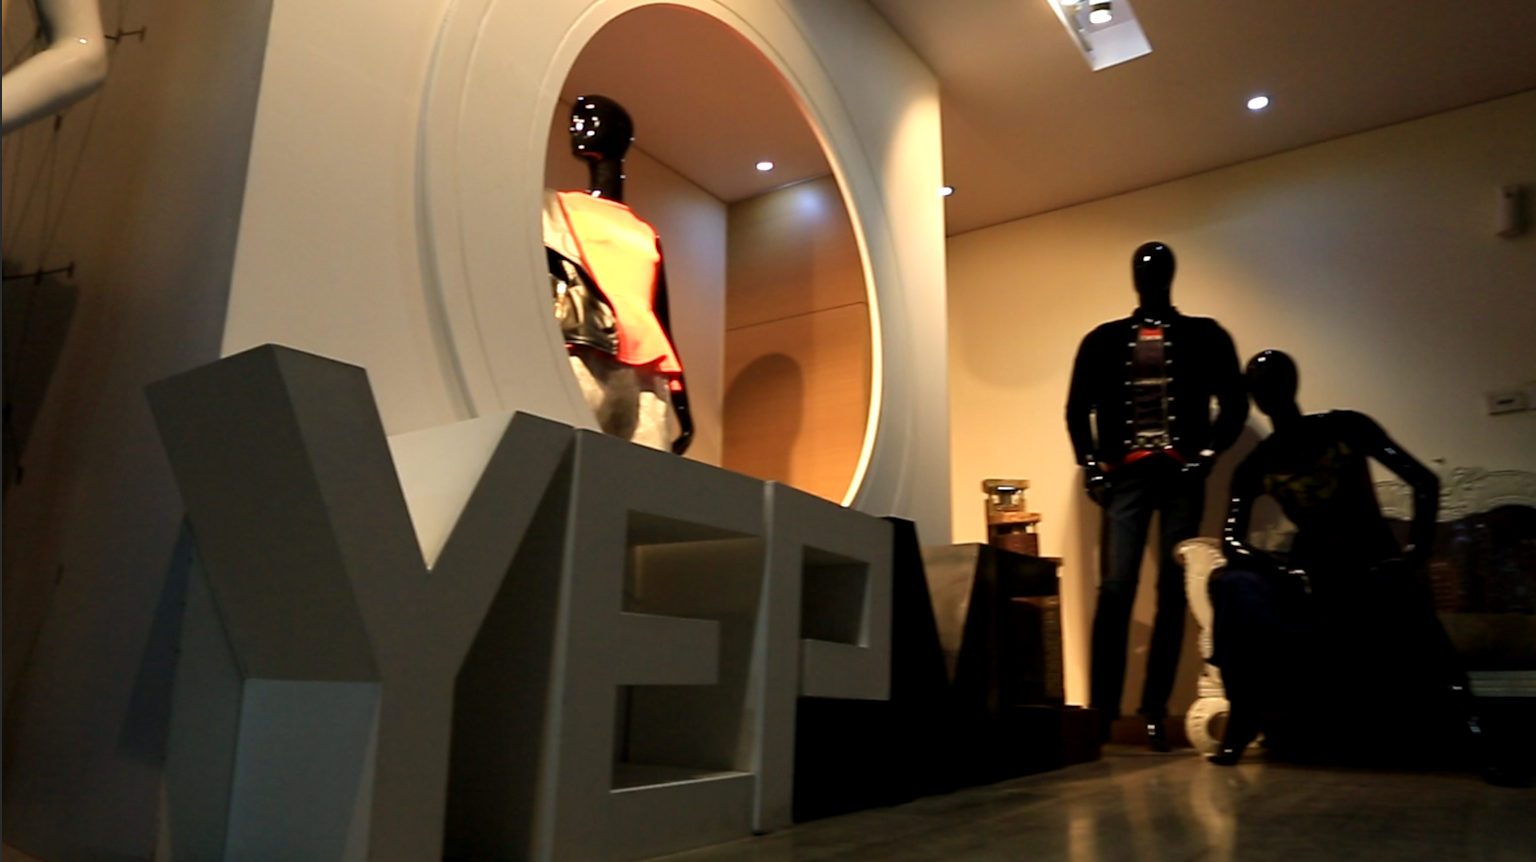 Yepme's physical storefront